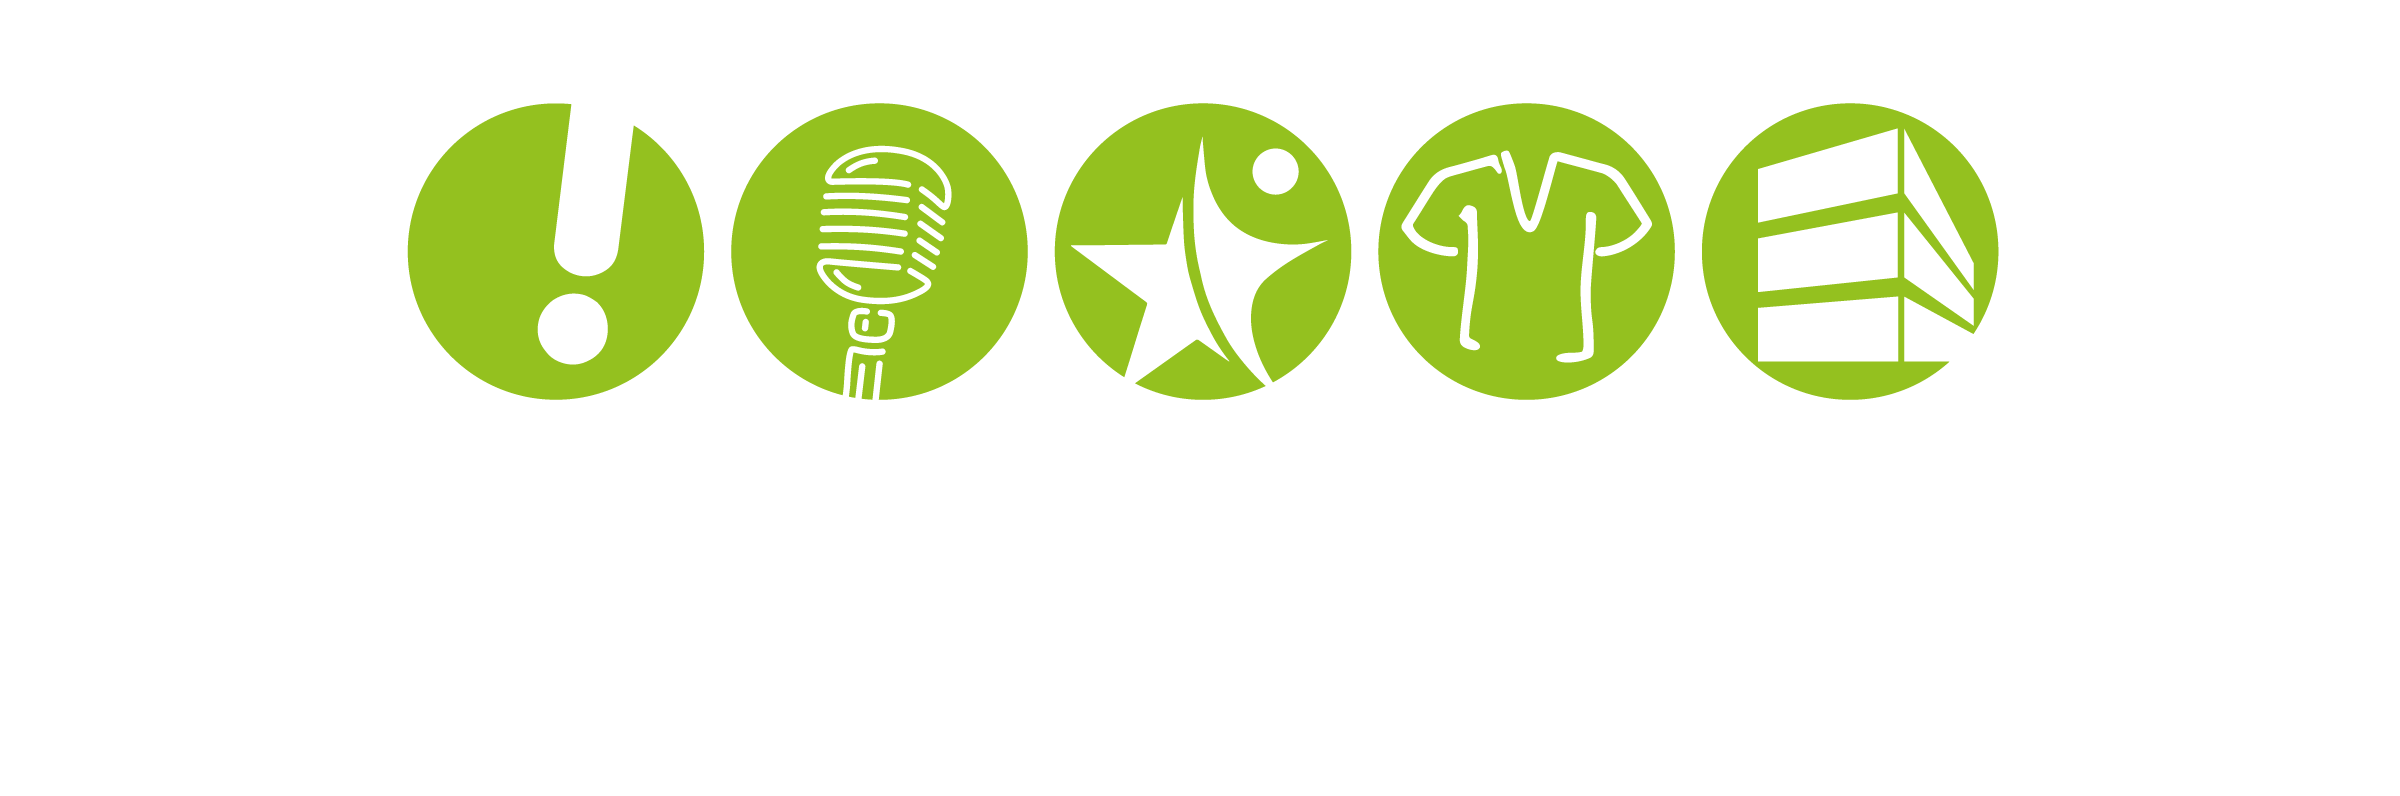 Promote Media Group Eckental Logo